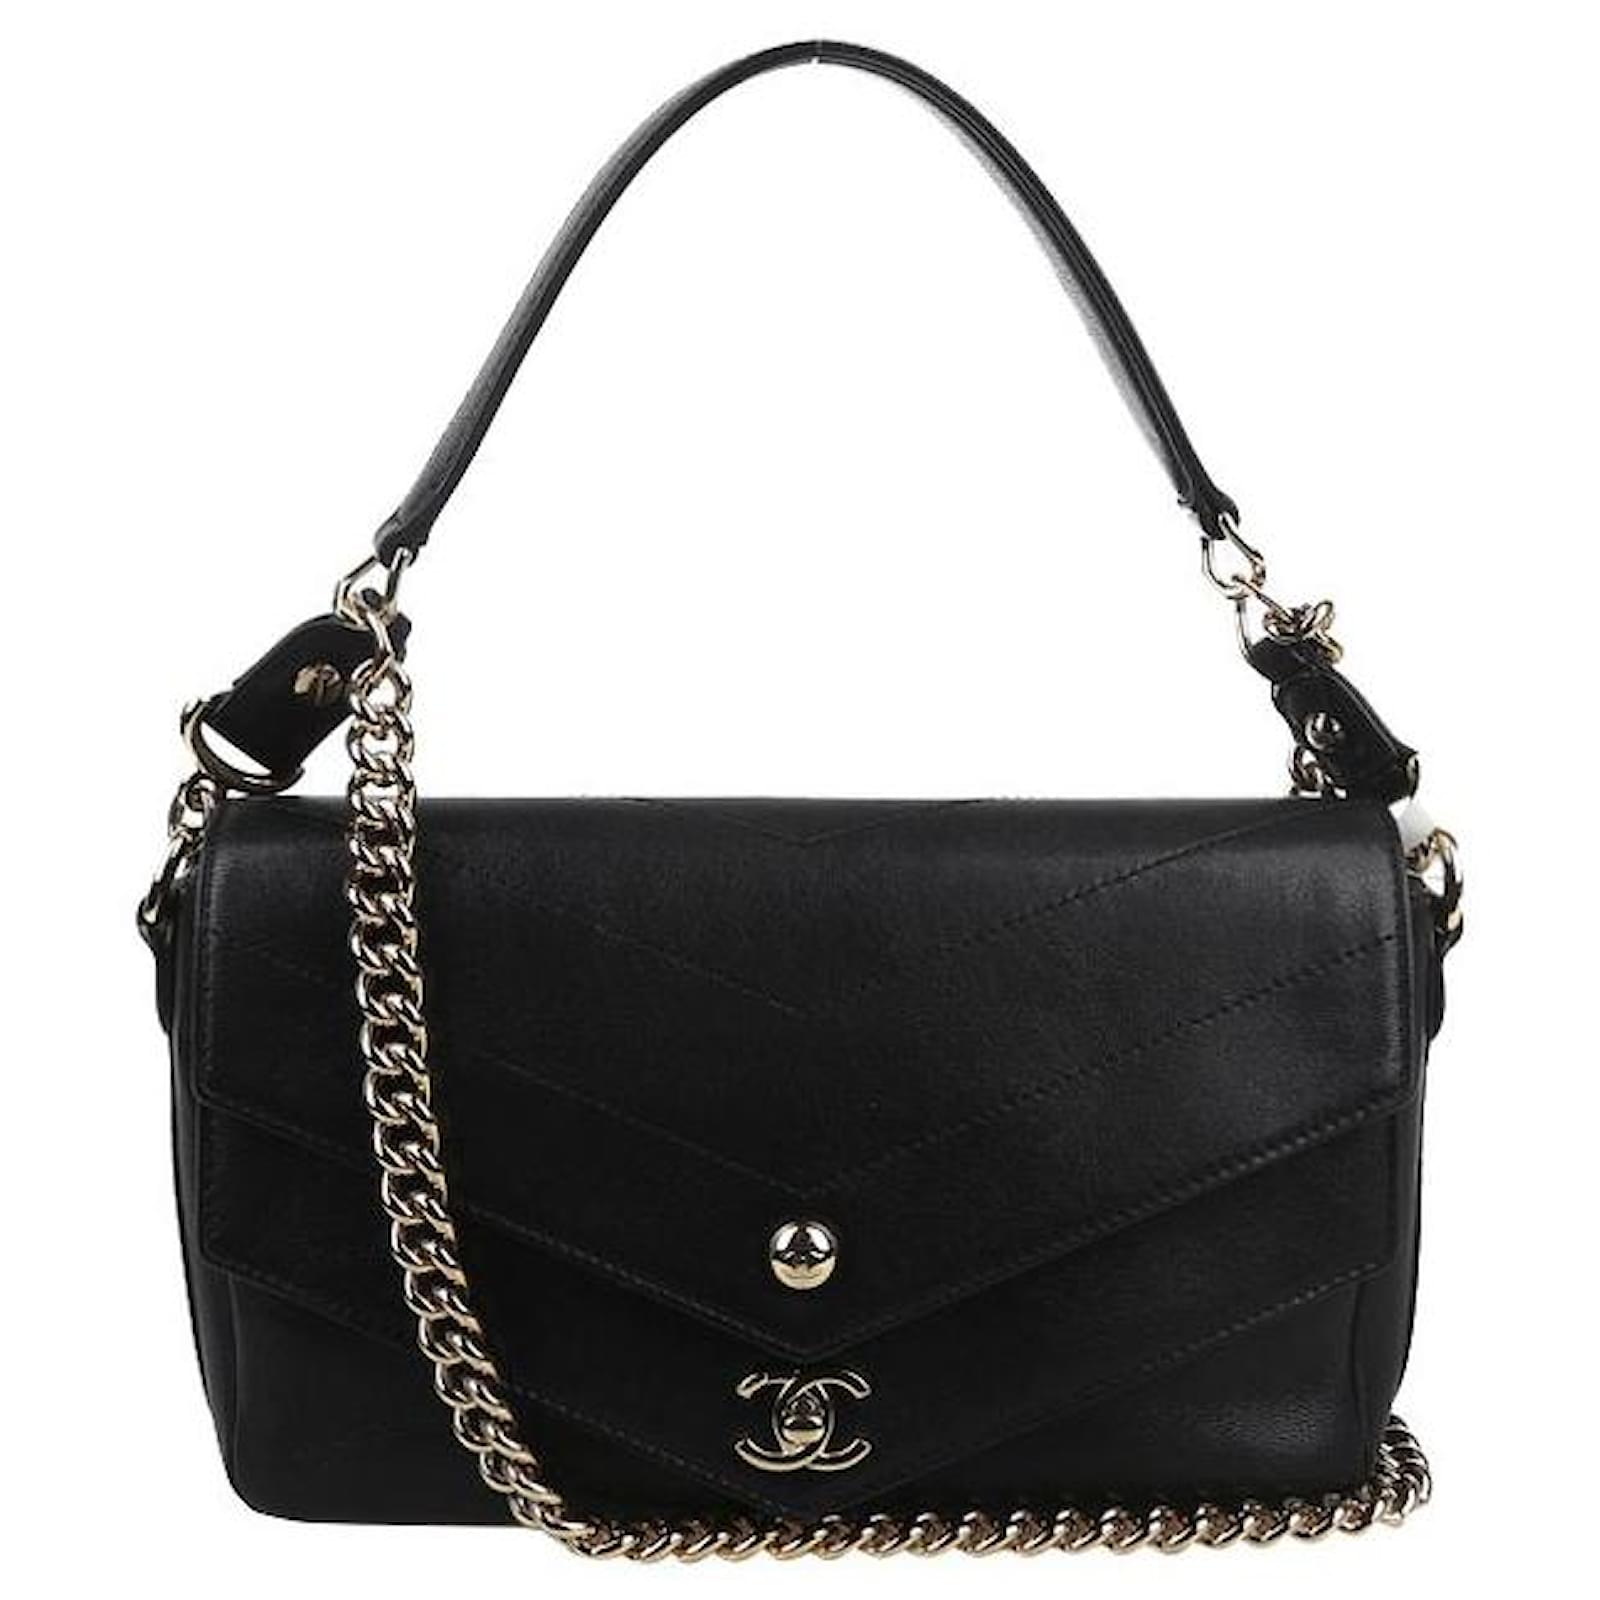 Chanel Black Lambskin Chevron Envelope Bag